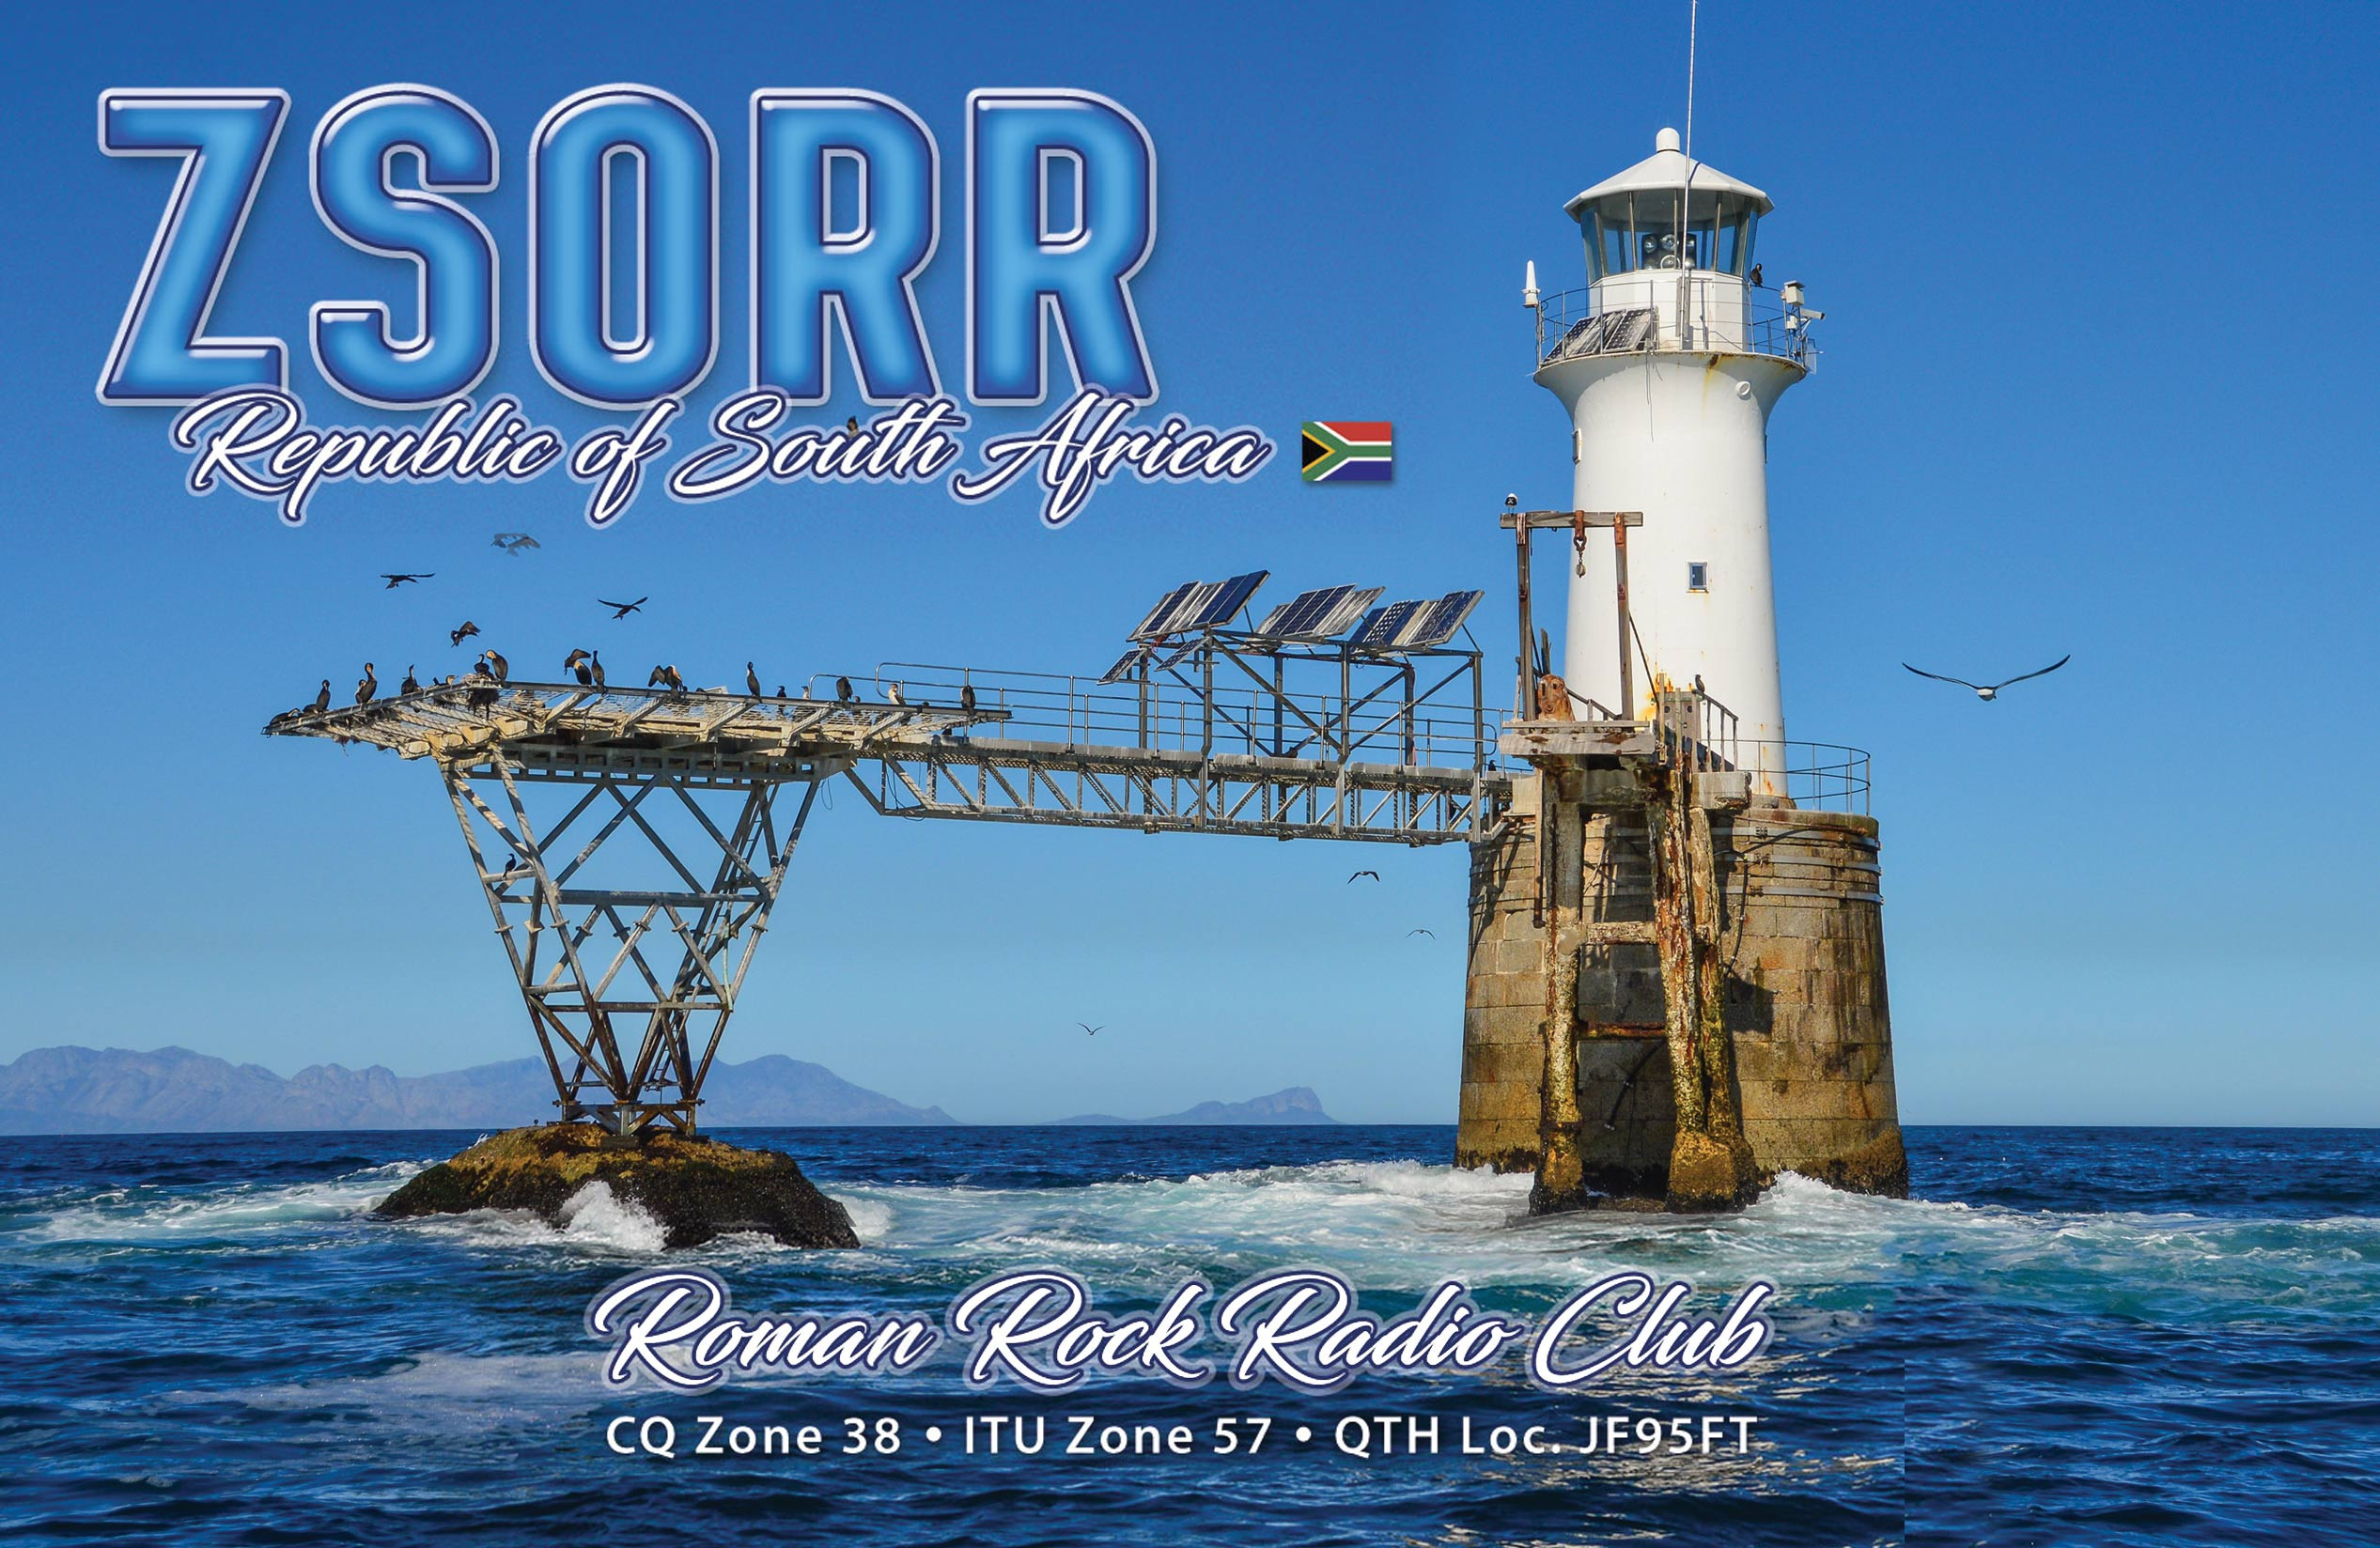 ZS0RR Roman Rock Radio Club, South Africa QSL Card